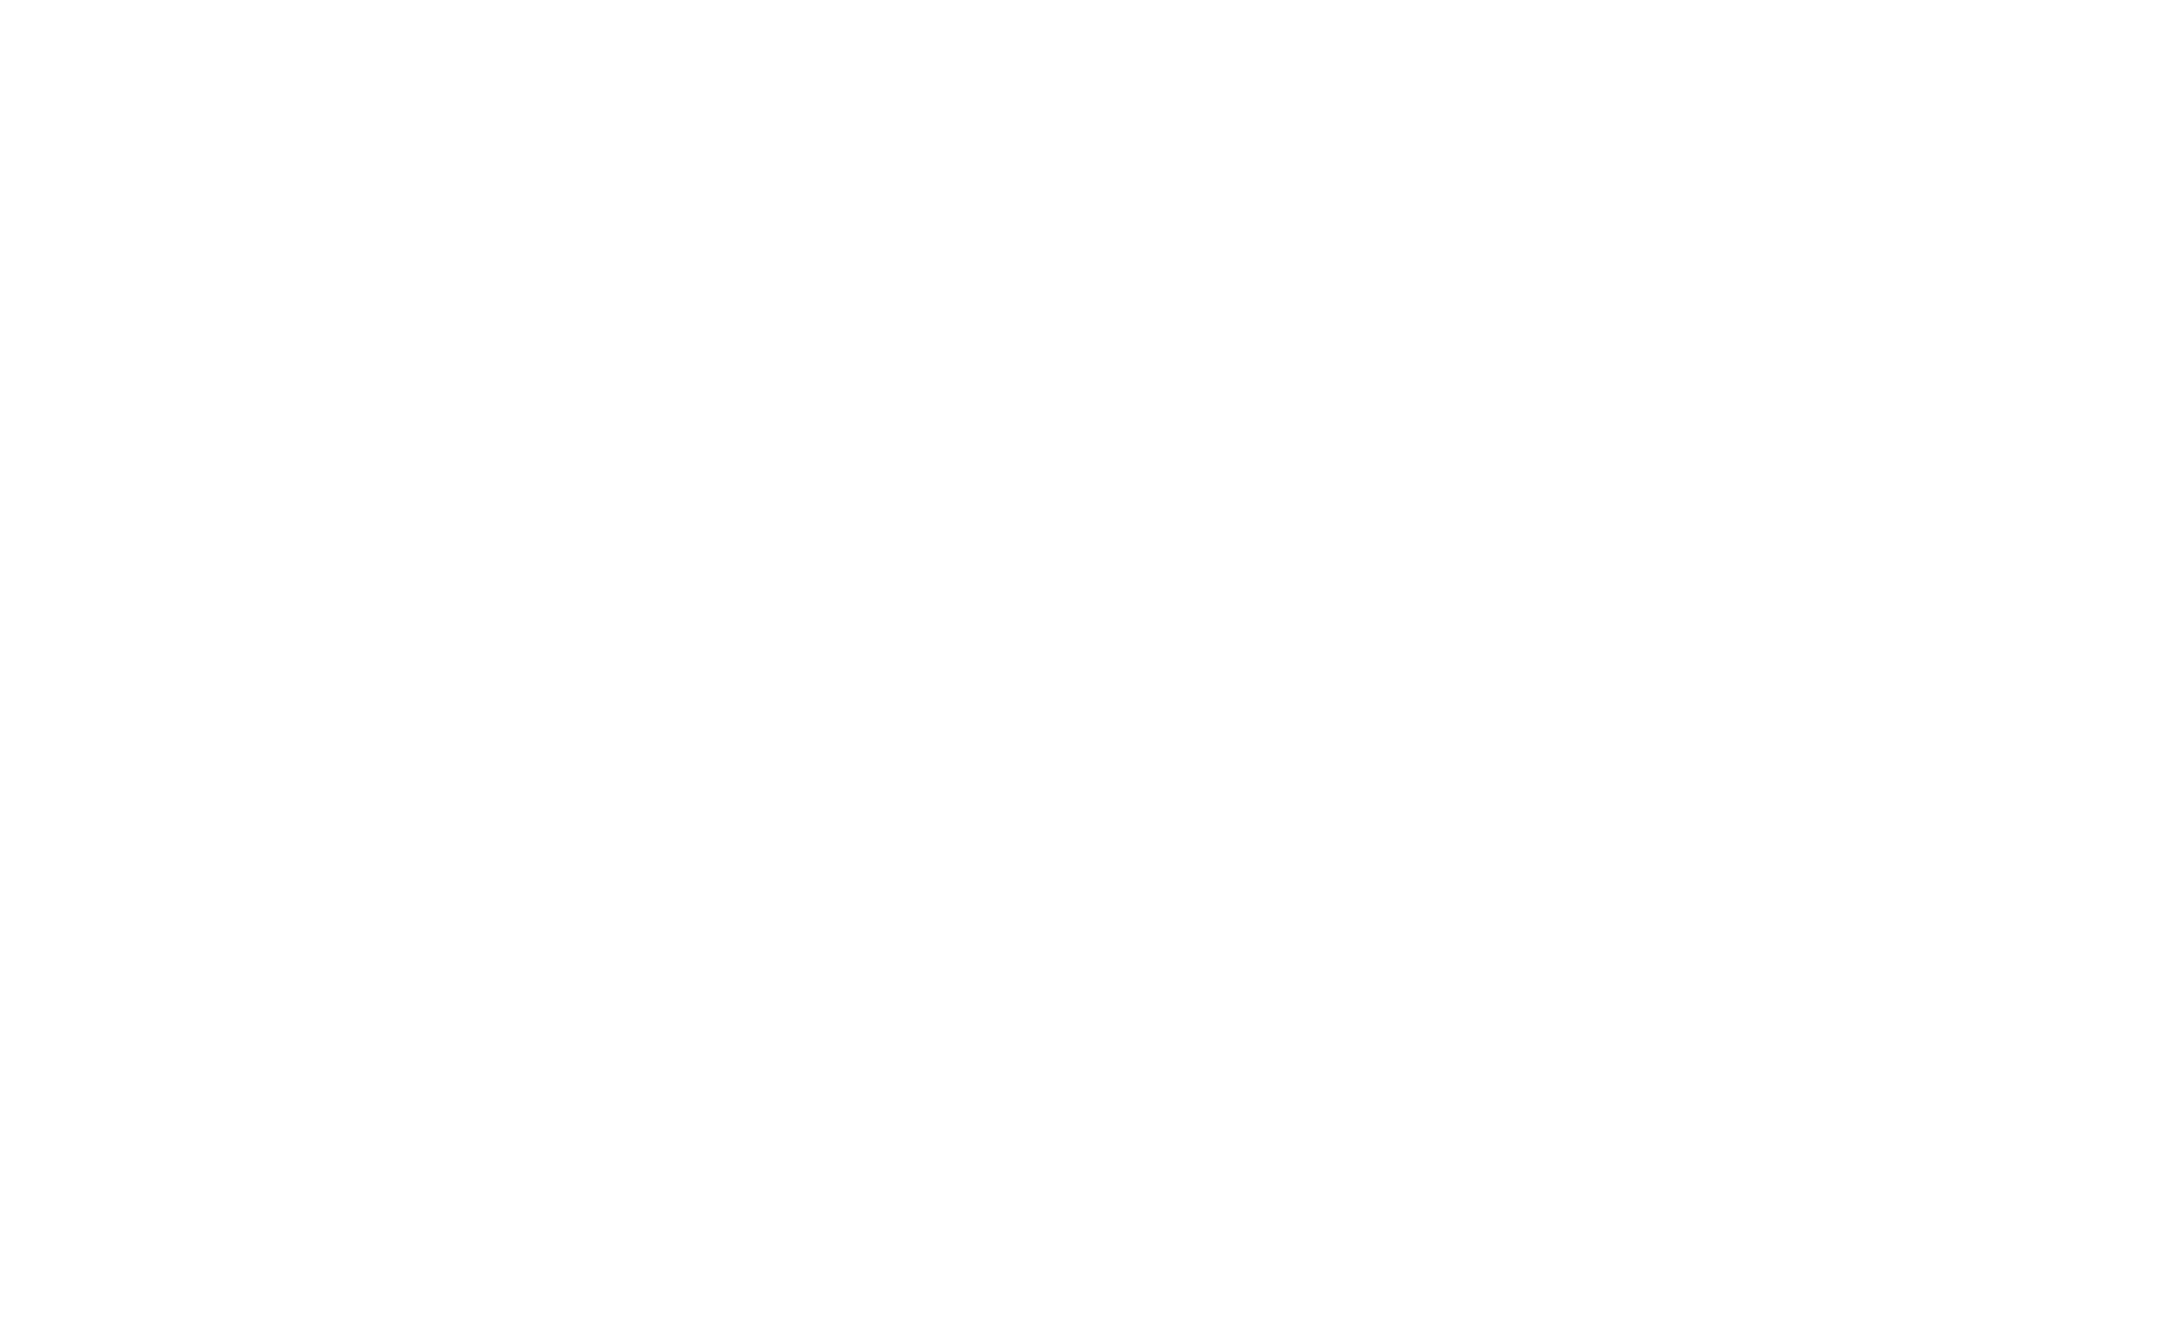 Markalytic Digital Strategy Logo